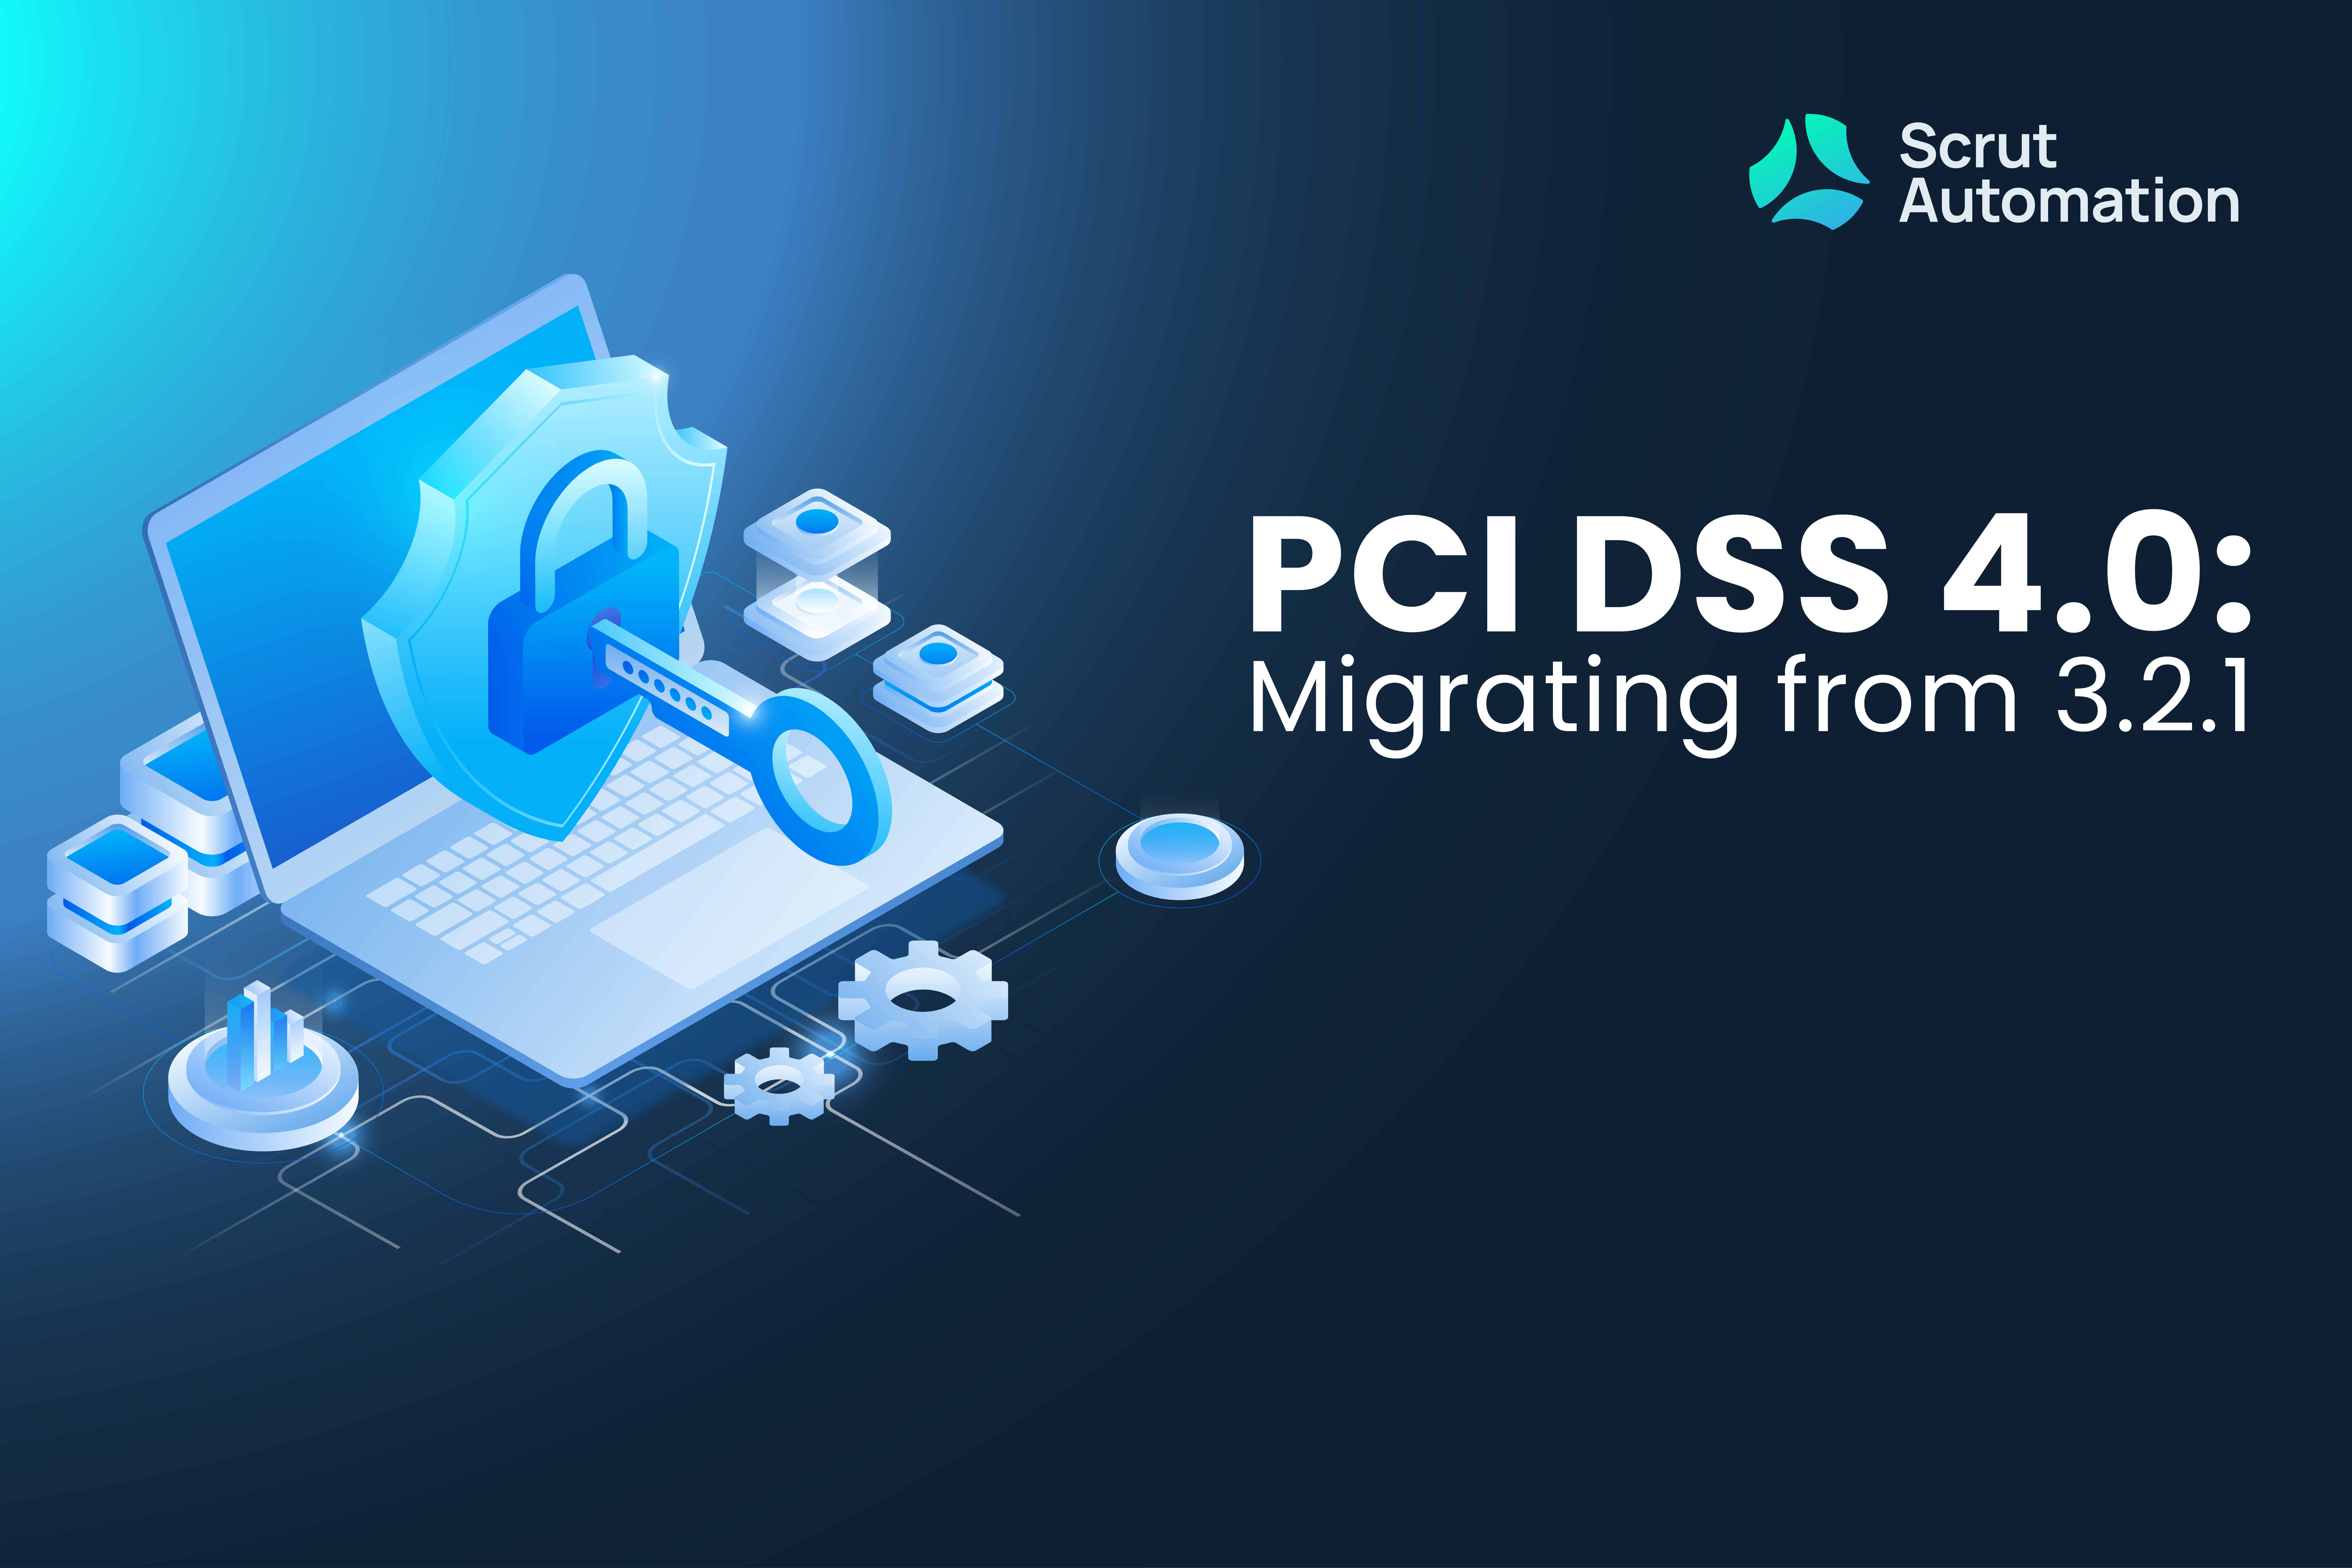 PCI DSS 4.0.